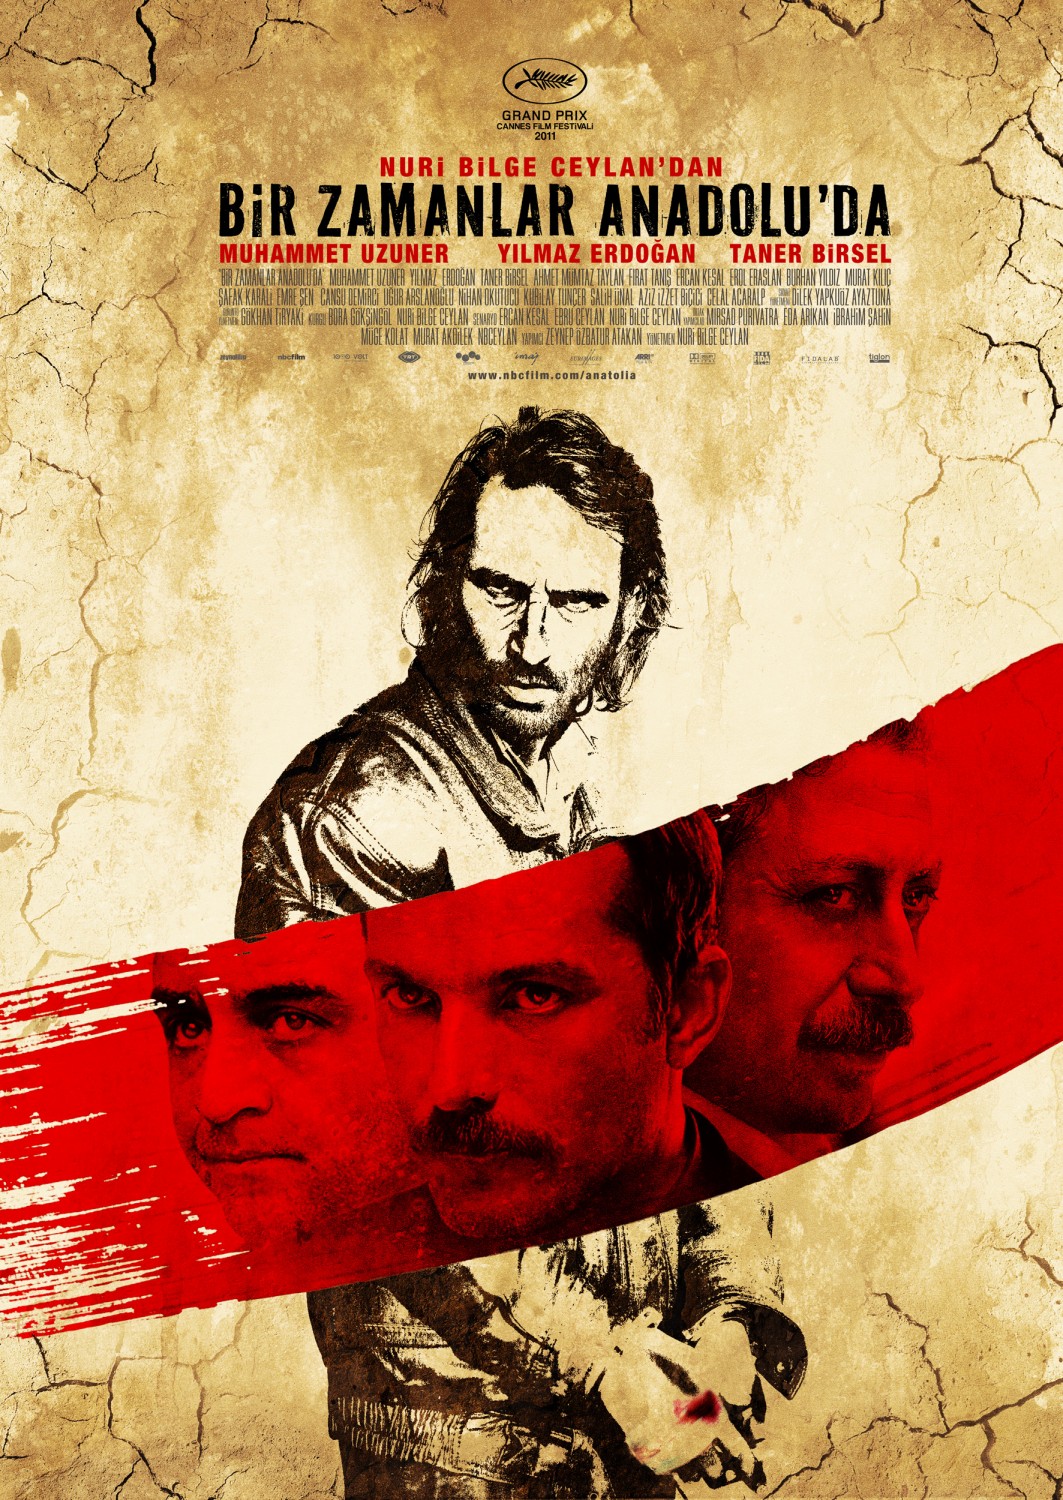 Extra Large Movie Poster Image for Bir zamanlar Anadolu'da (#5 of 8)